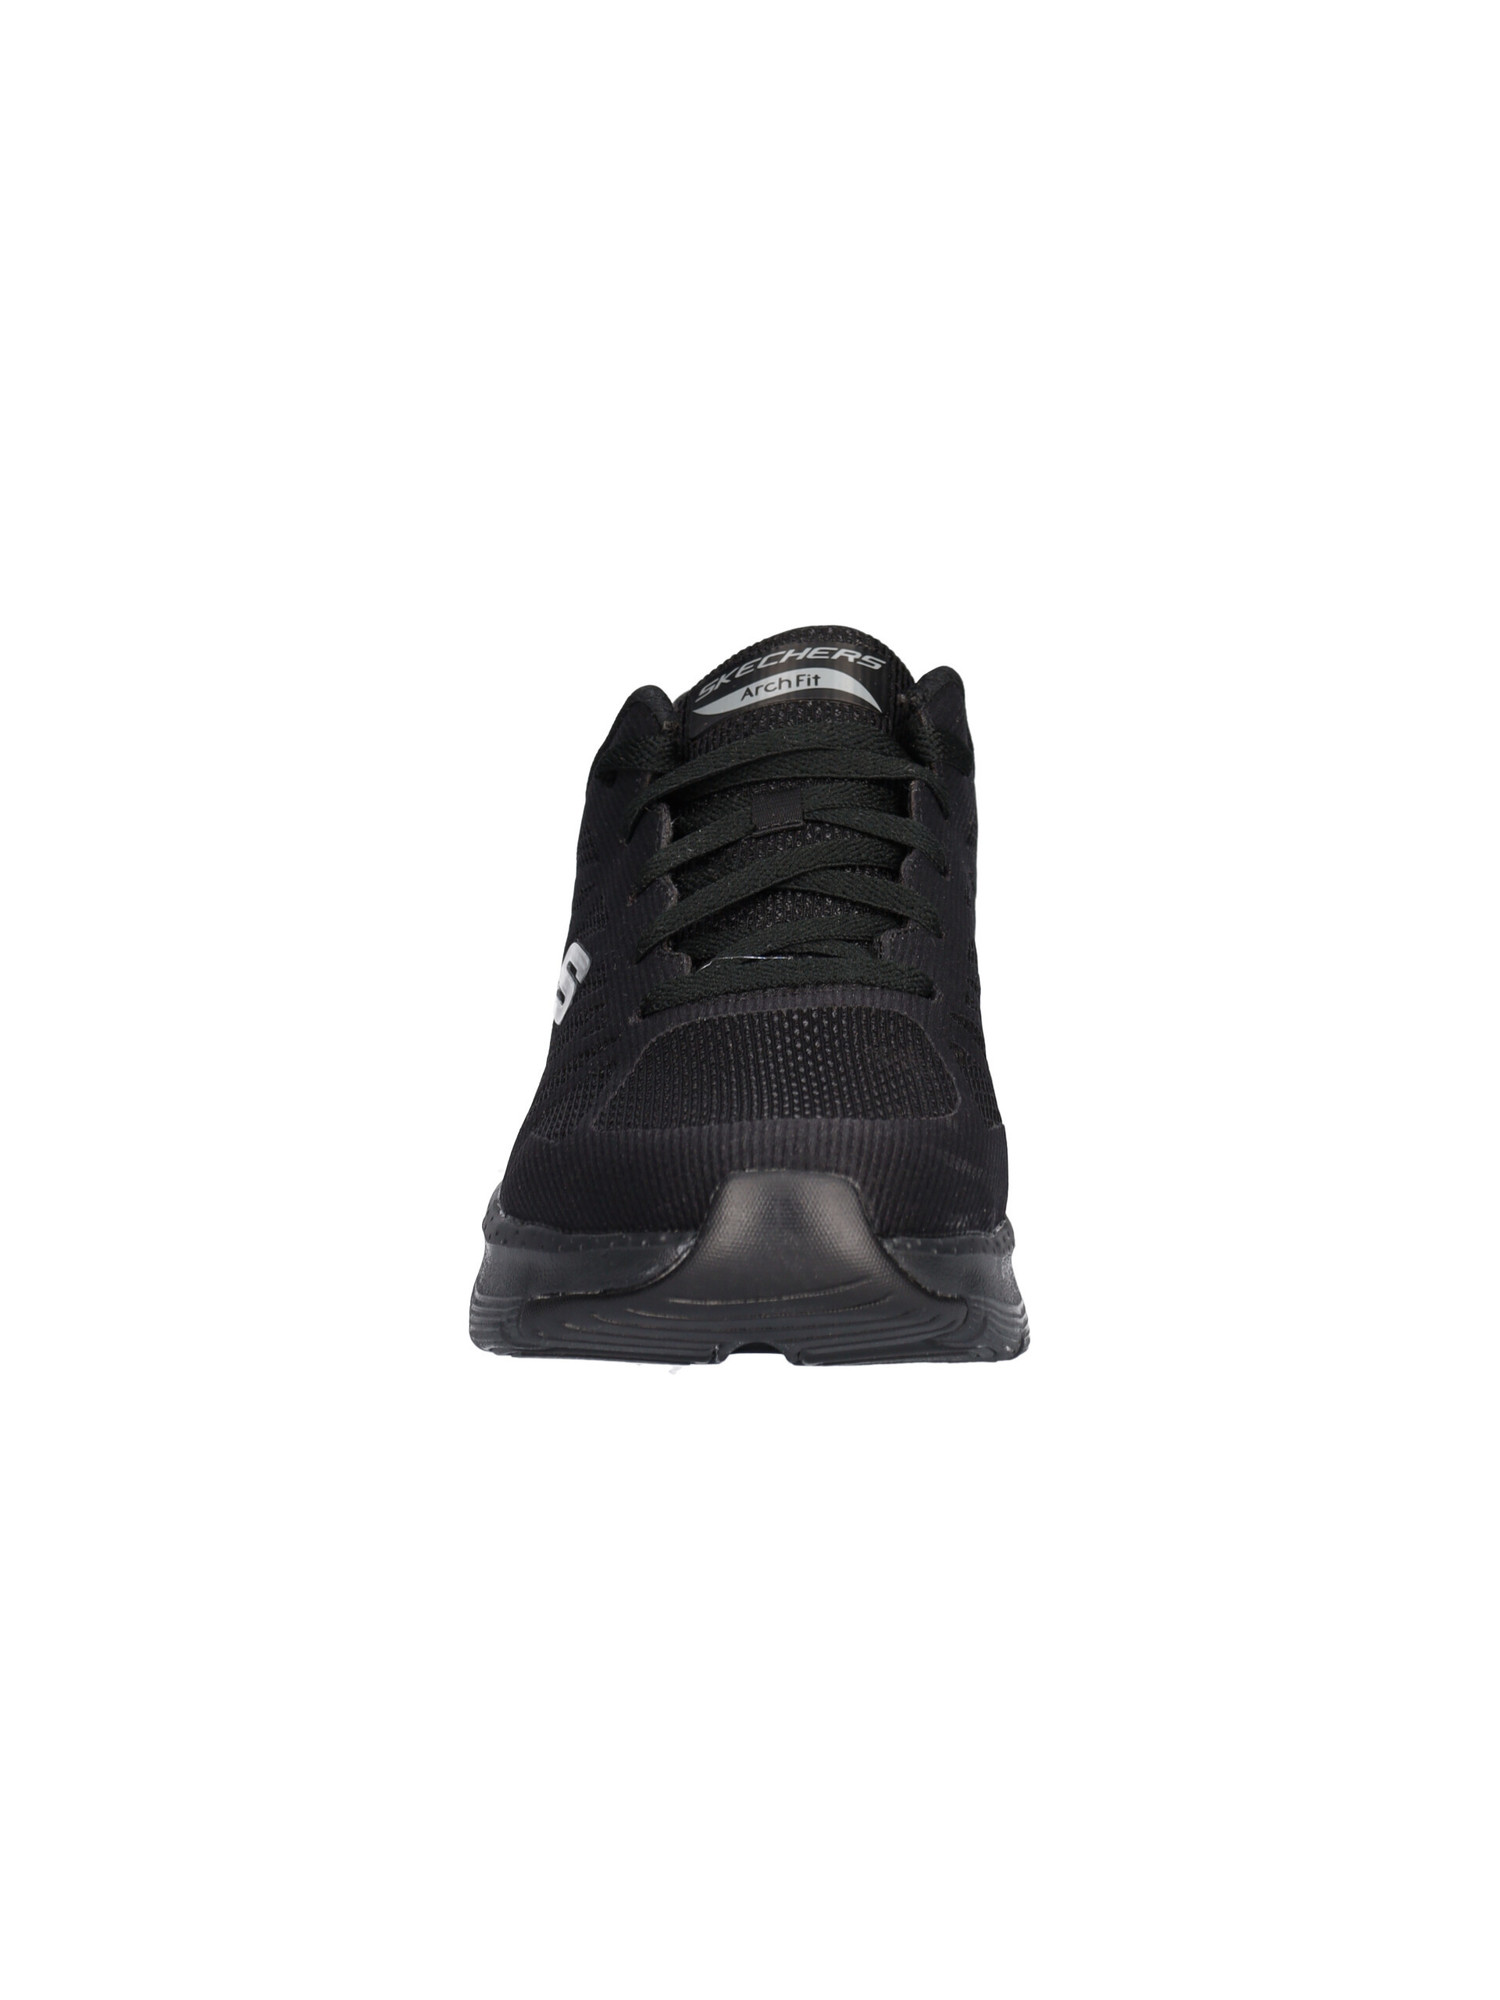 sneaker-skechers-archfit-da-uomo-nera-718861